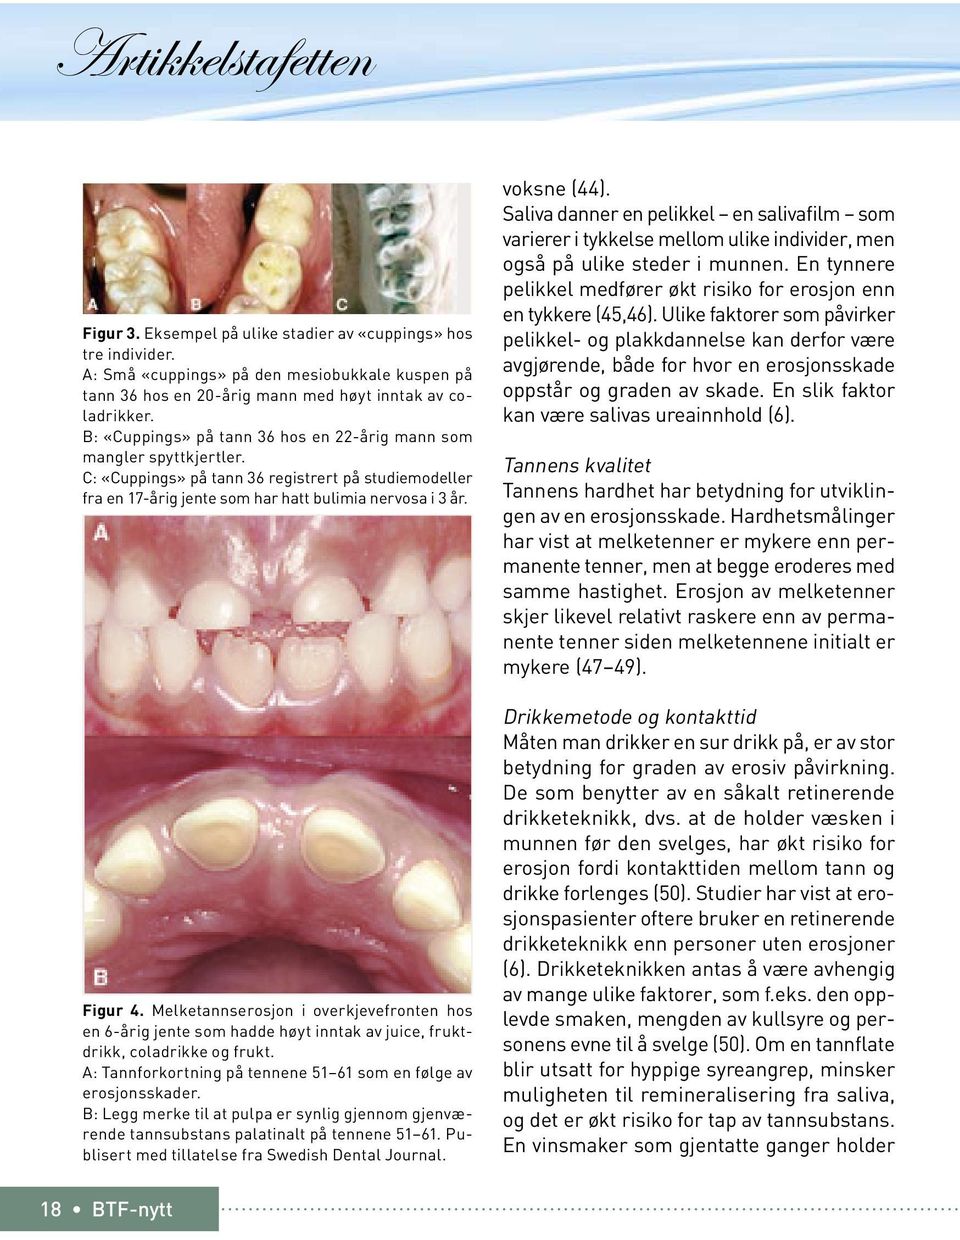 Cervikale defekter betraktes ofte som tannbørsteskader.